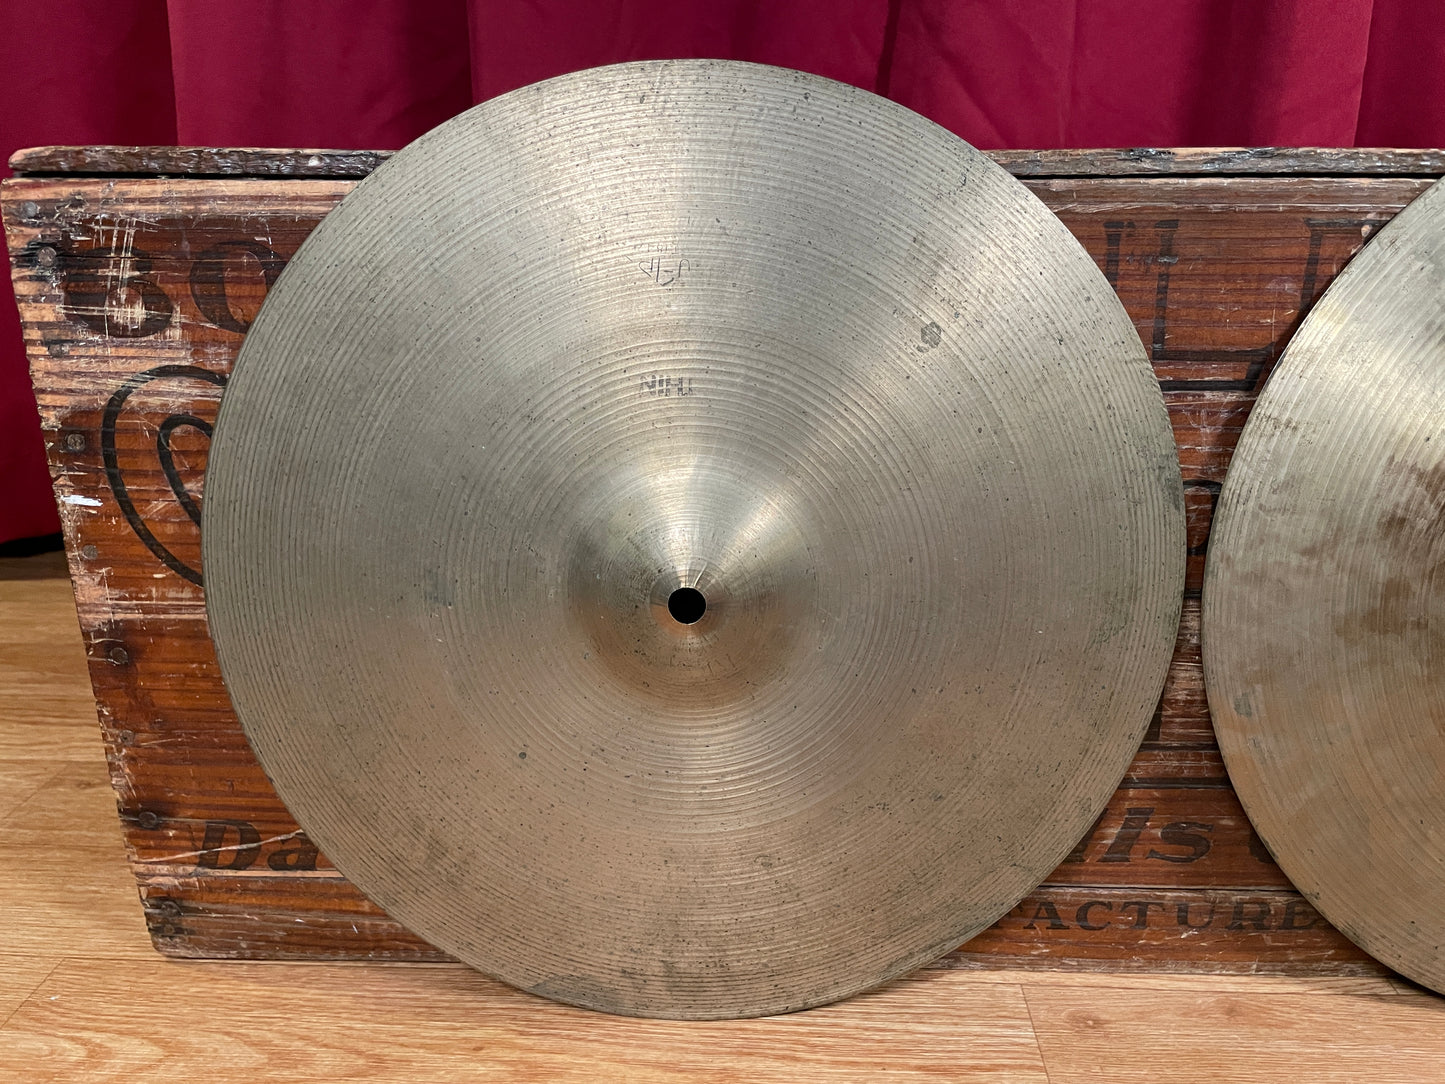 14" UFIP Vintage Hi-Hat Cymbal Pair 684g/792g Ajaha Made In Italy *Video Demo*